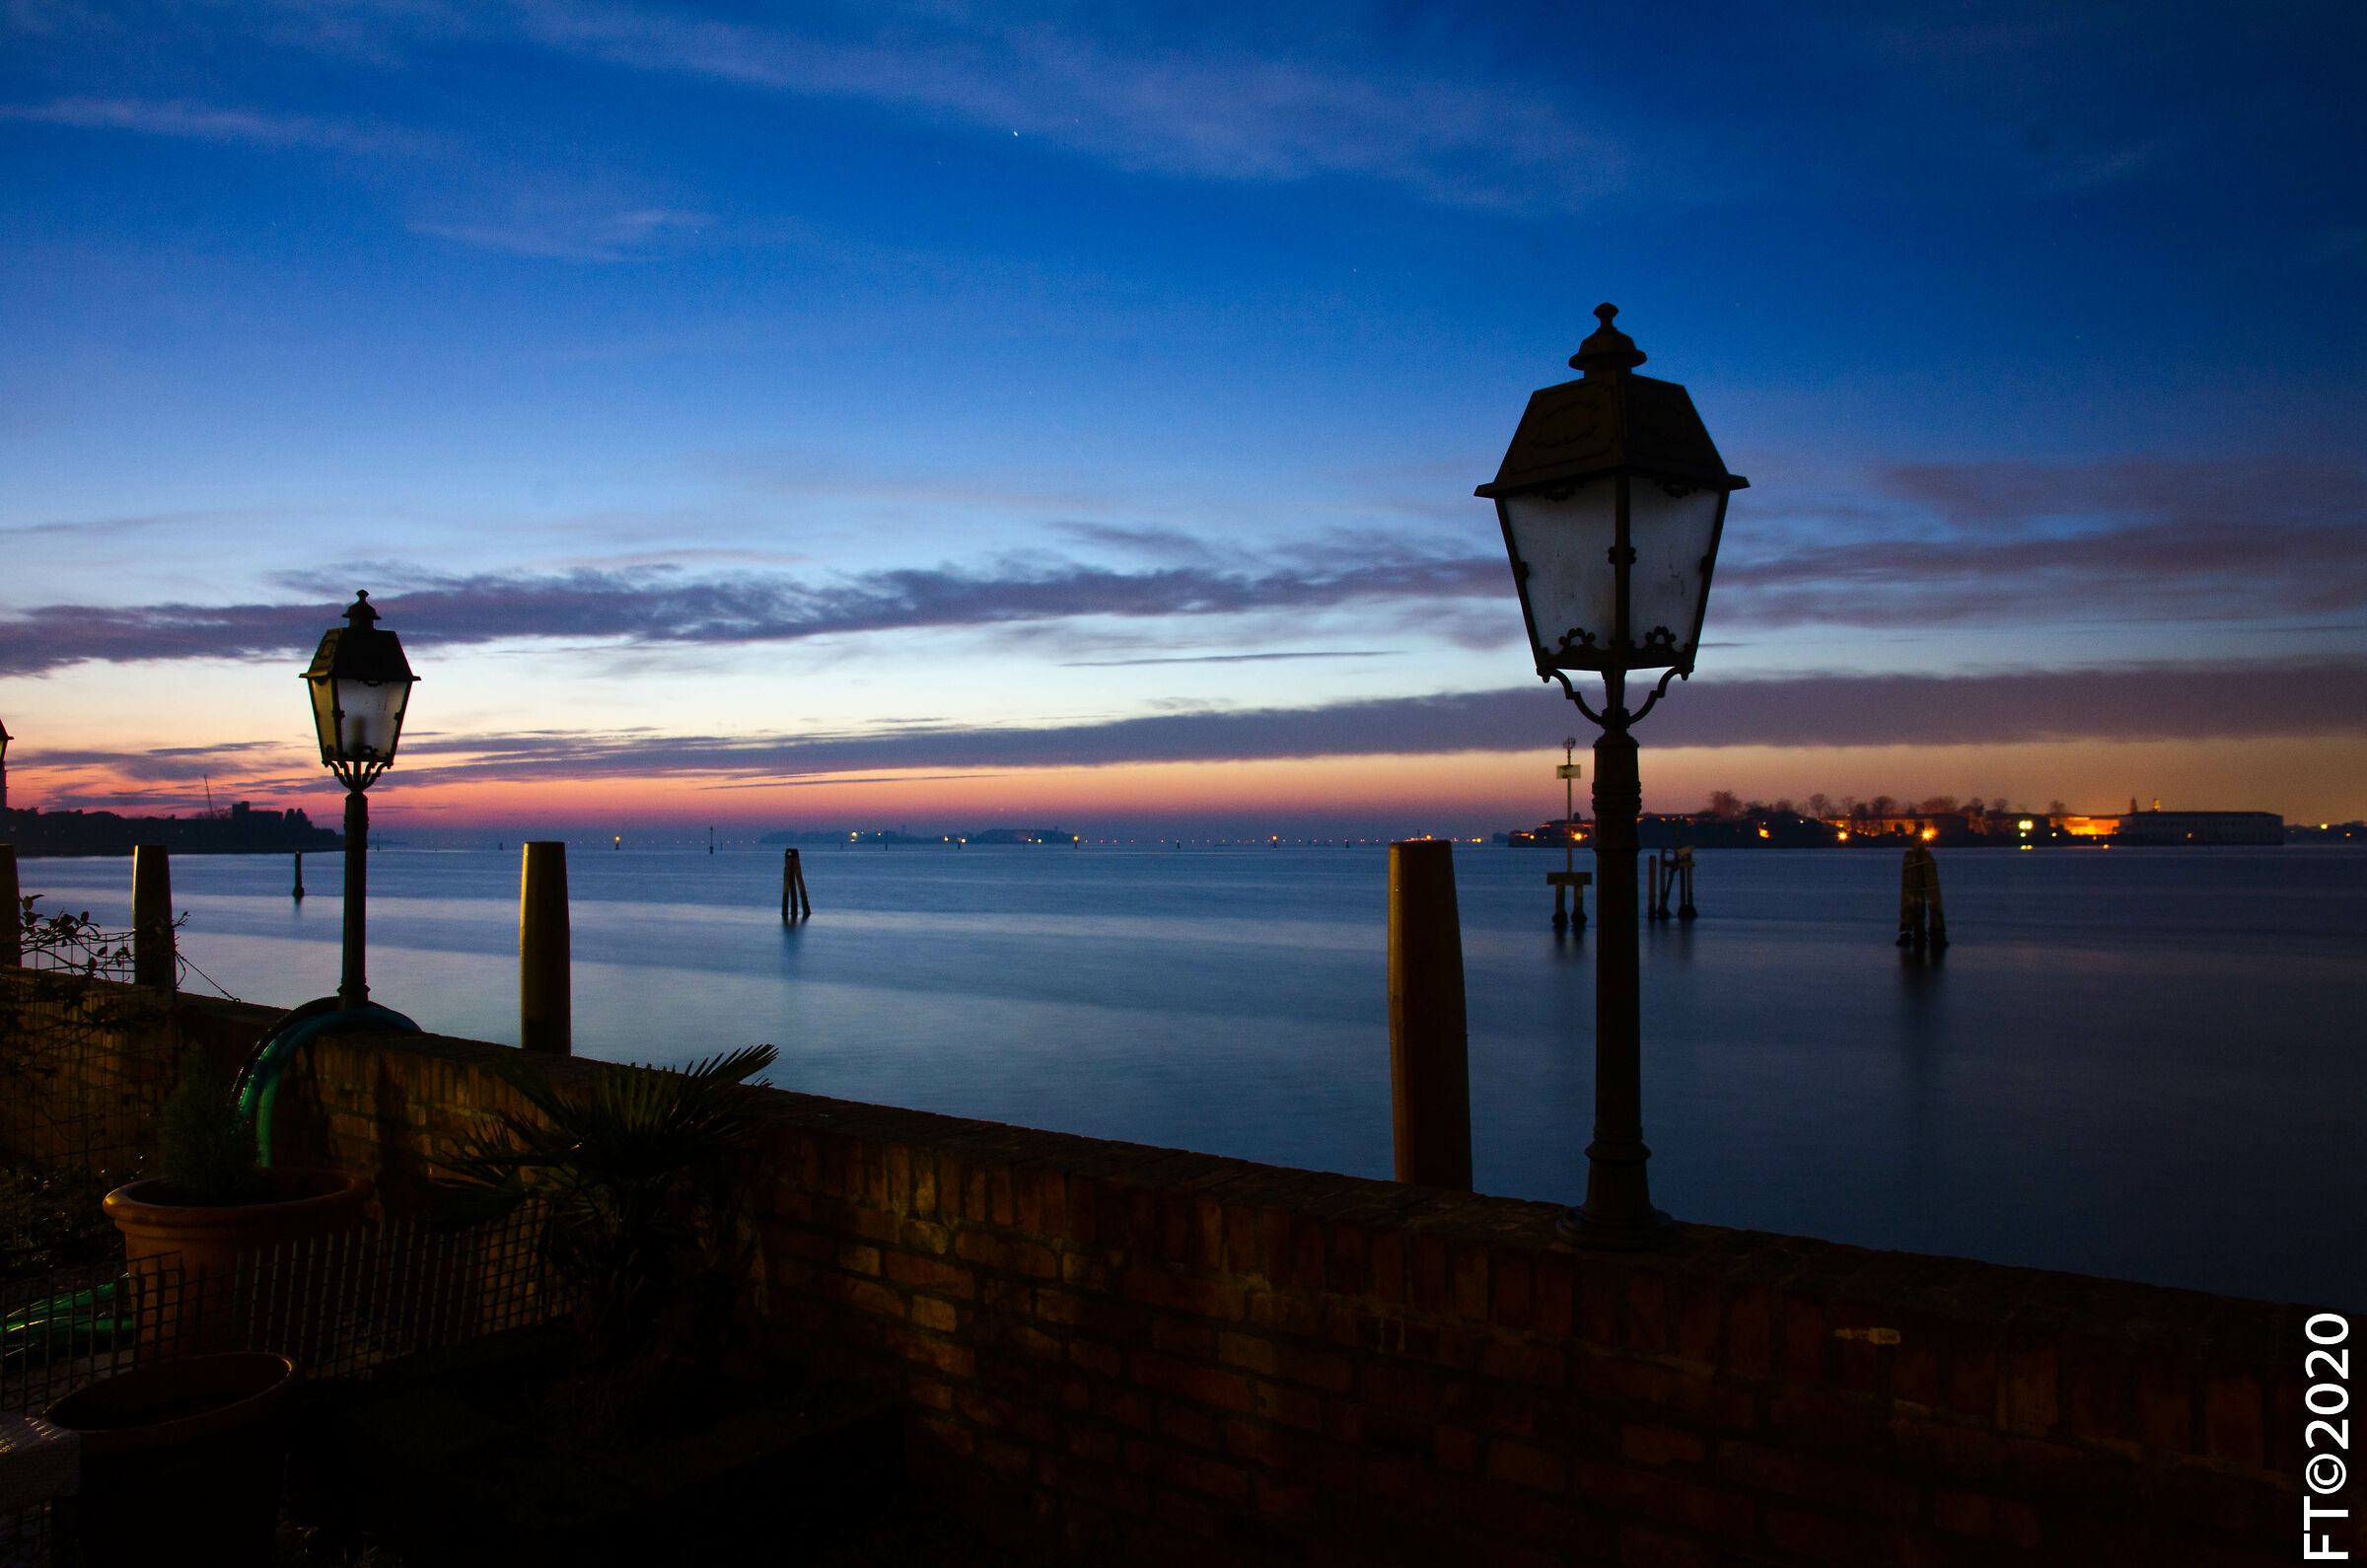 Venice Lagoon at night...